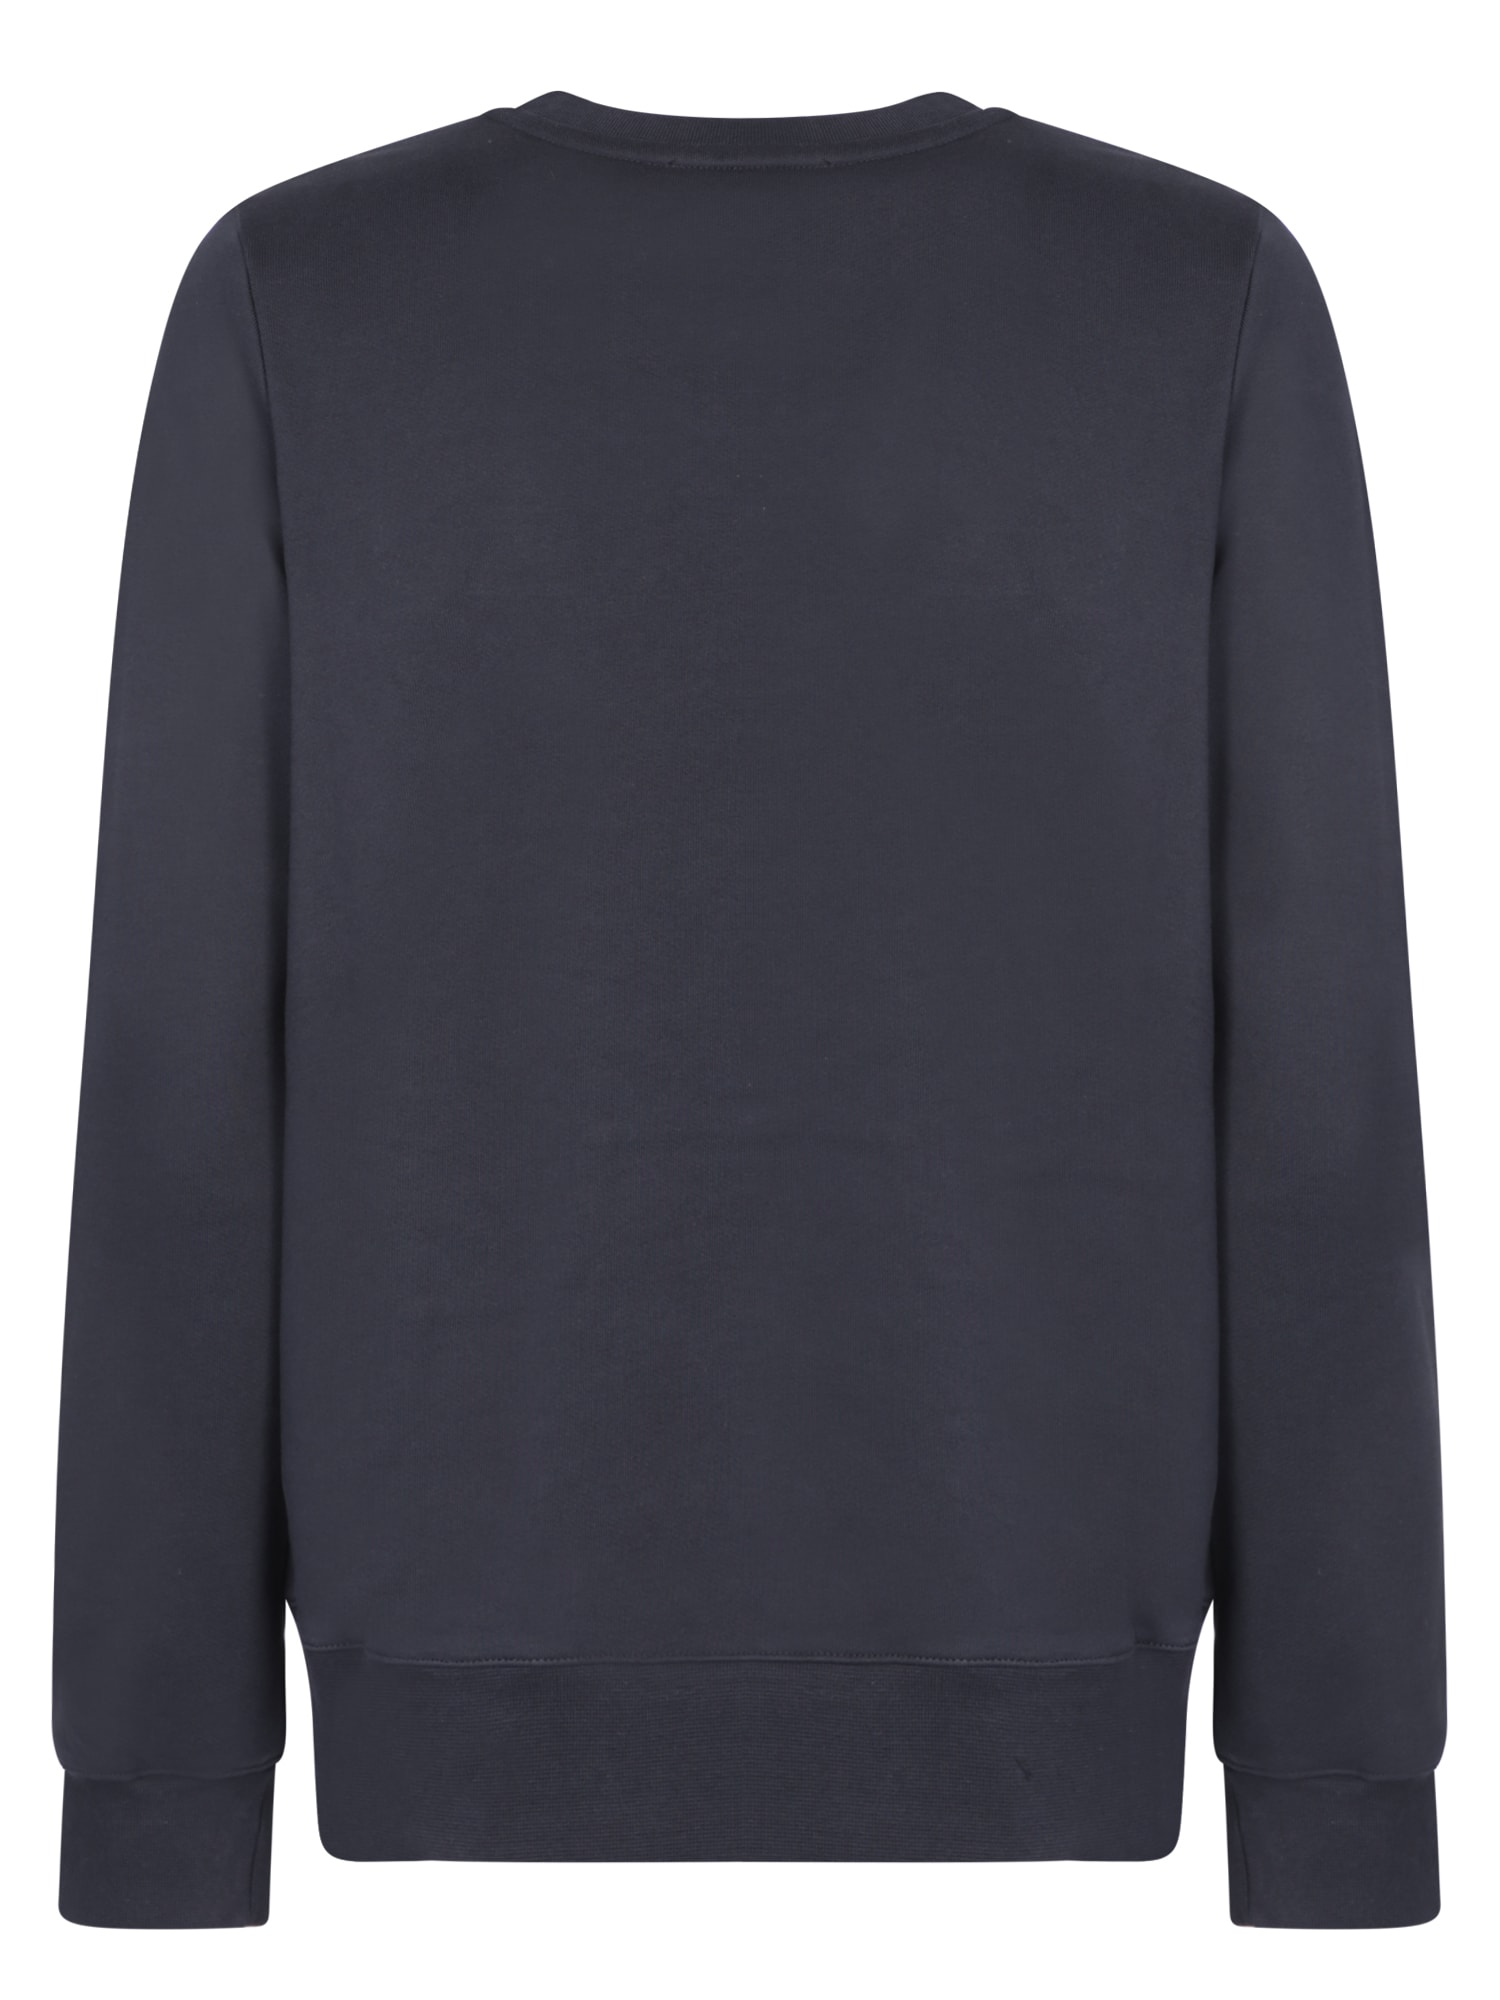 Shop Apc Skye Black Sweatshirt